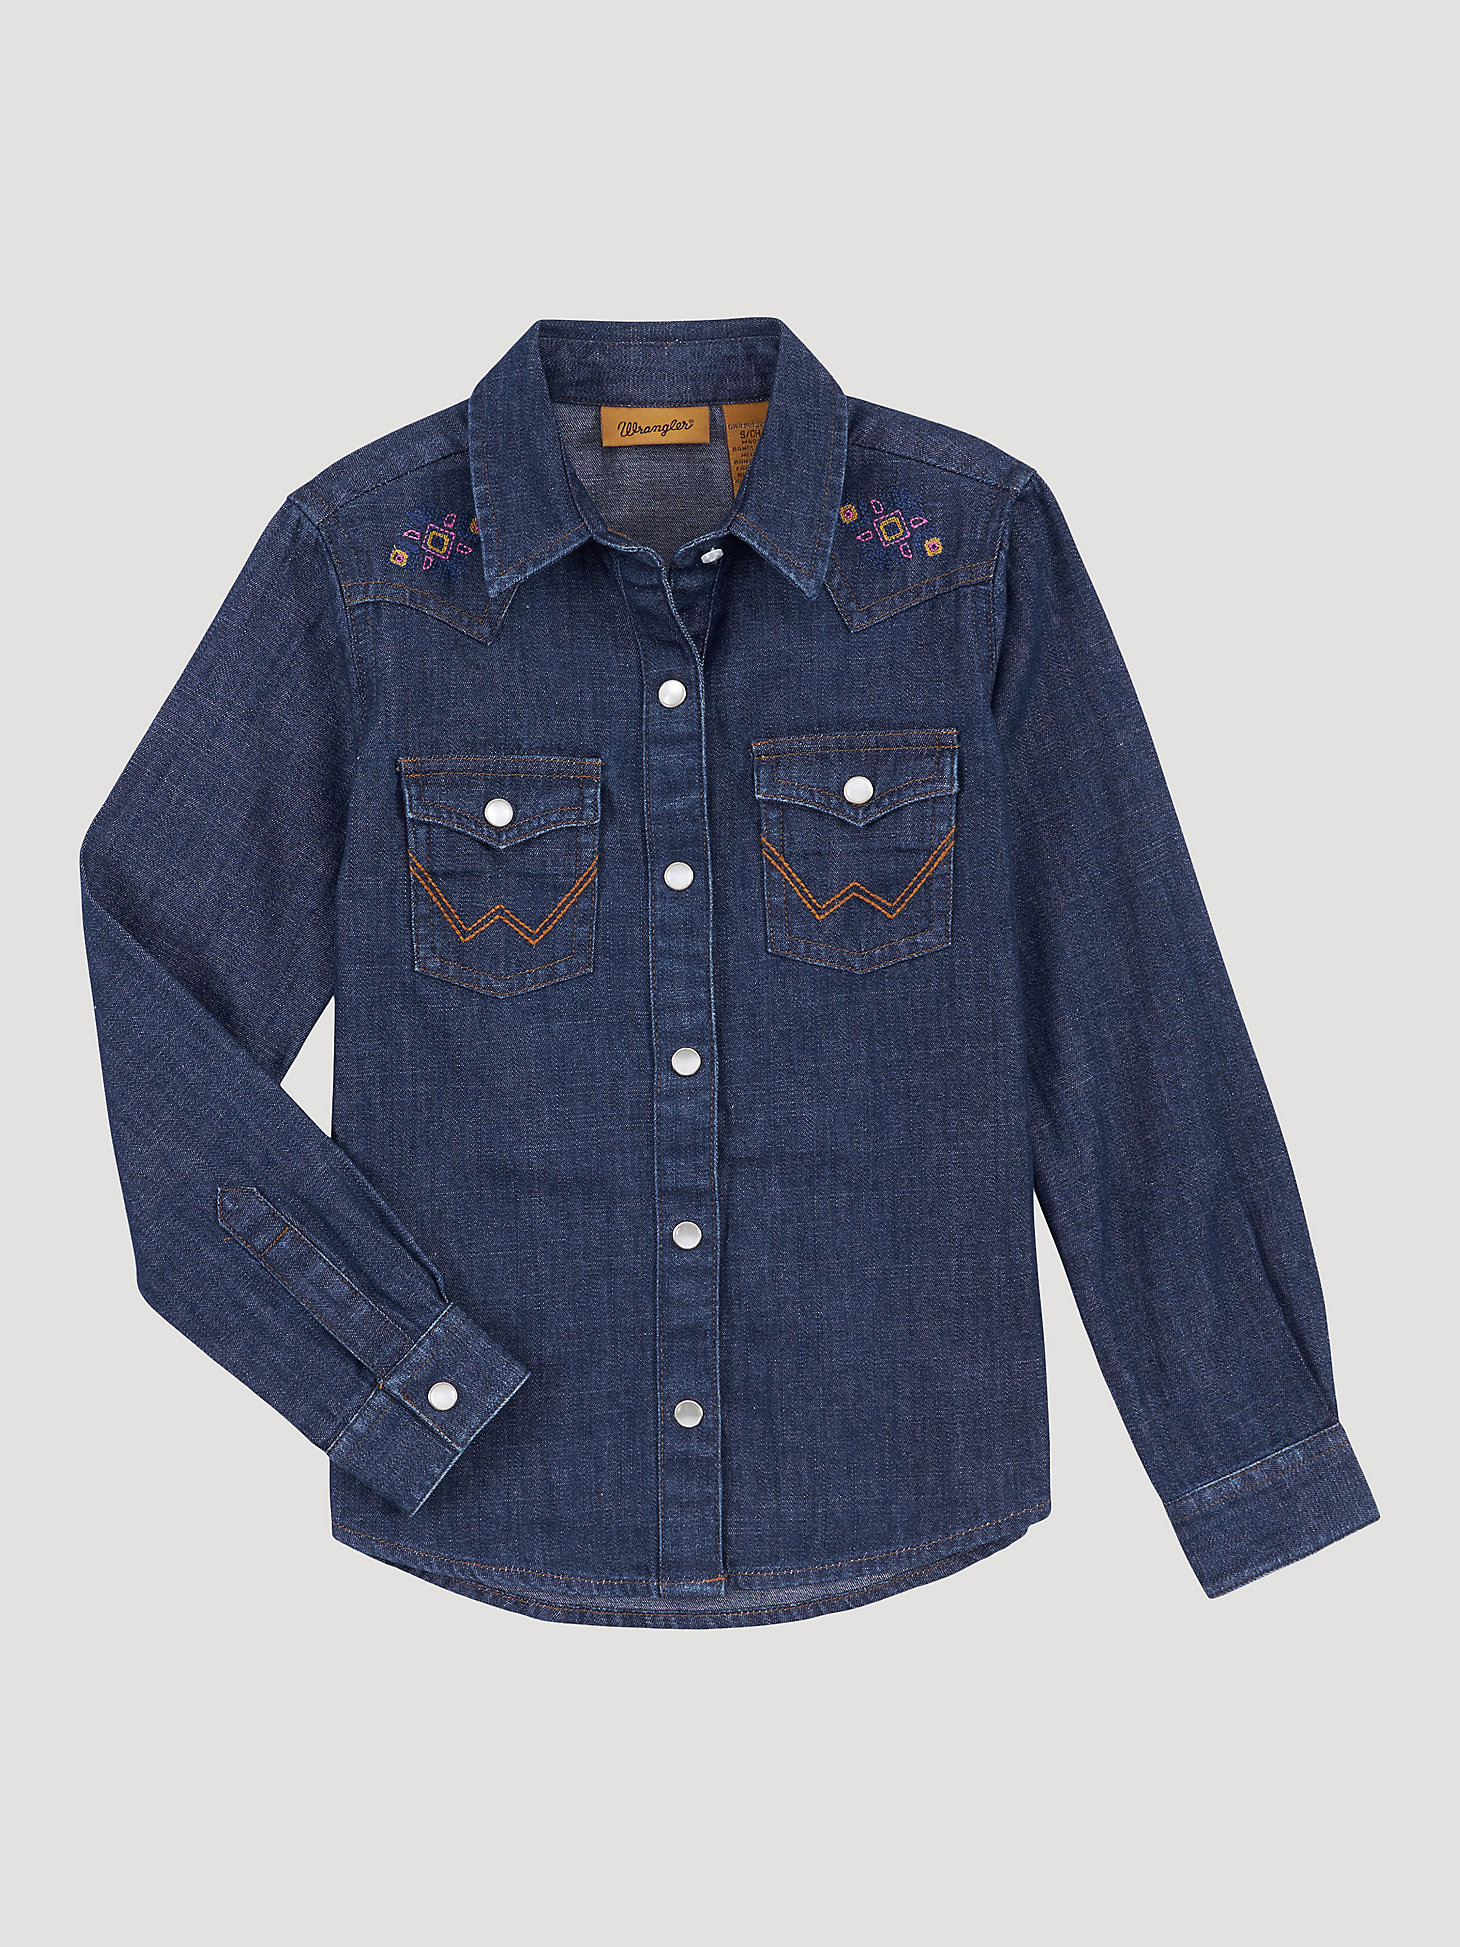 Girl's Long Sleeve Embroidered Western Snap Denim Shirt in Blue Denim alternative view 2